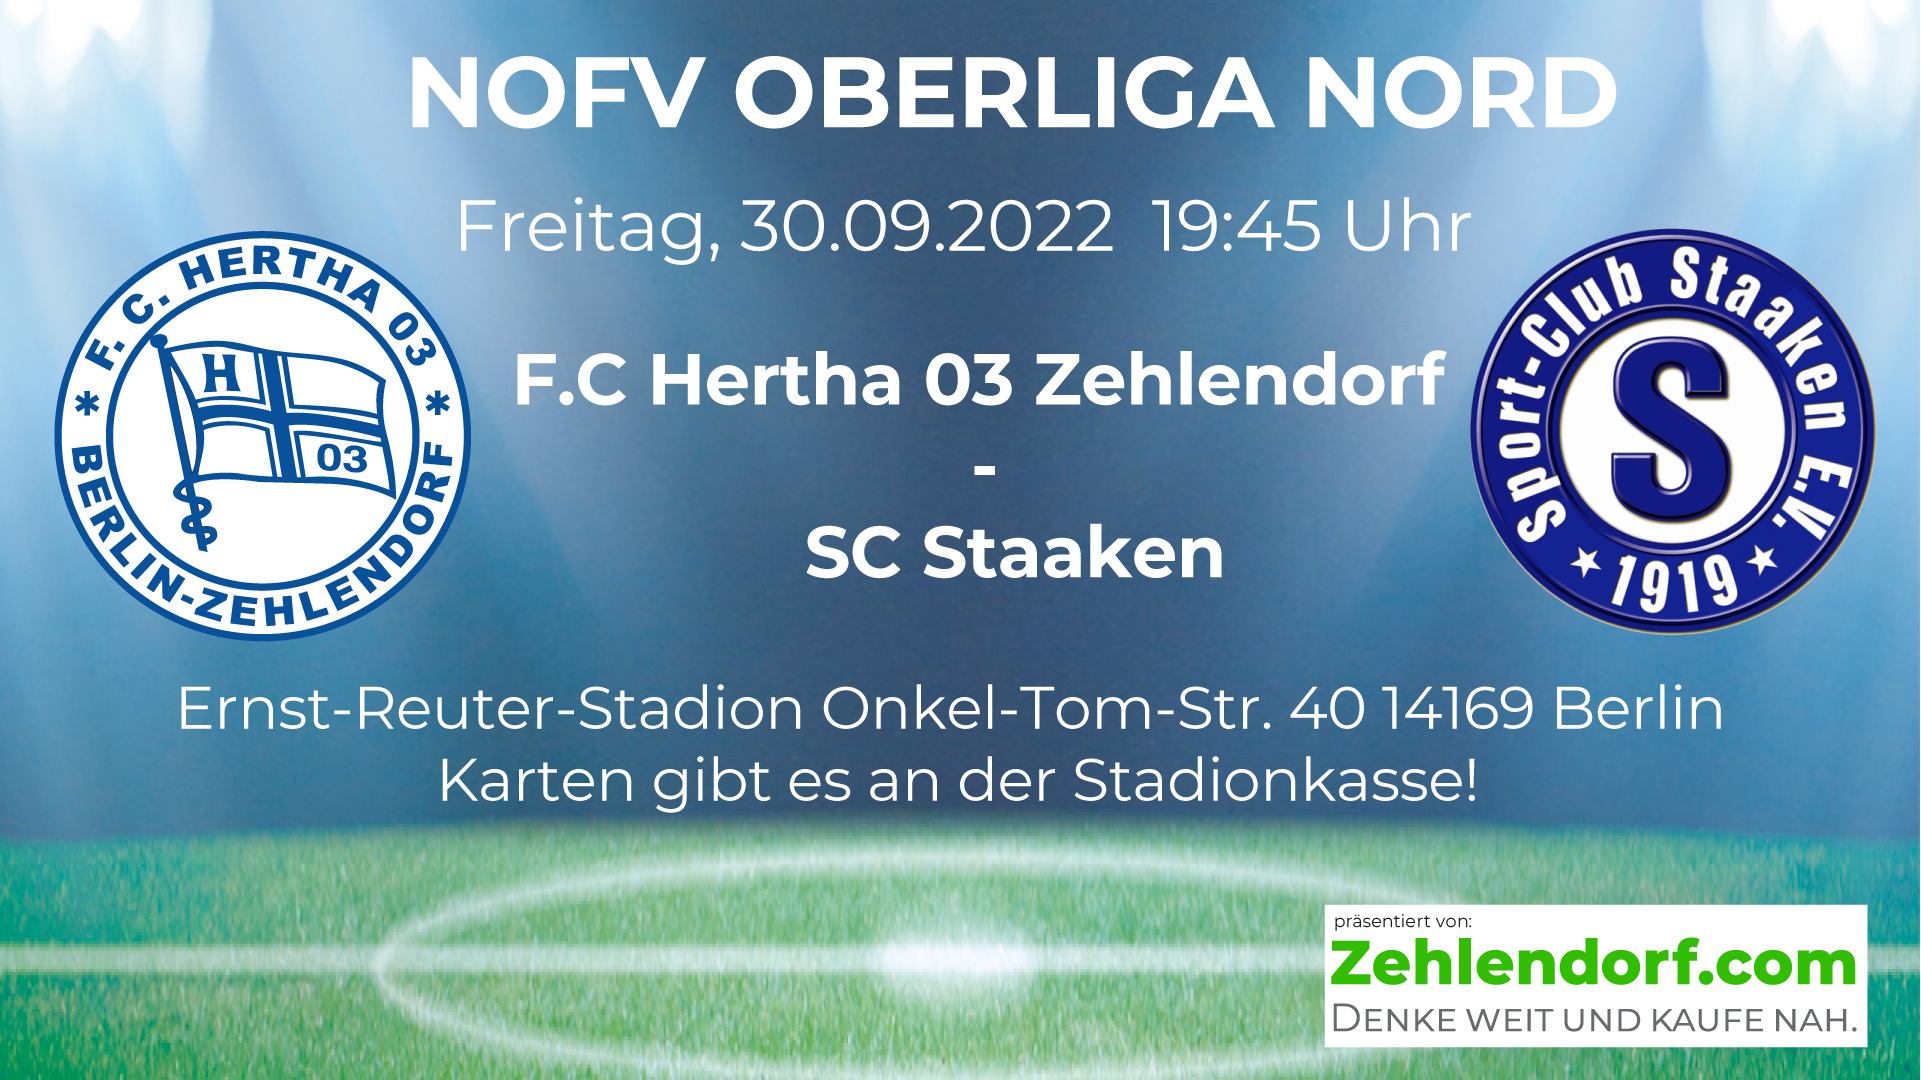 F.C. Hertha 03 Zehlendorf vs. SC Staaken am 30.09.2022